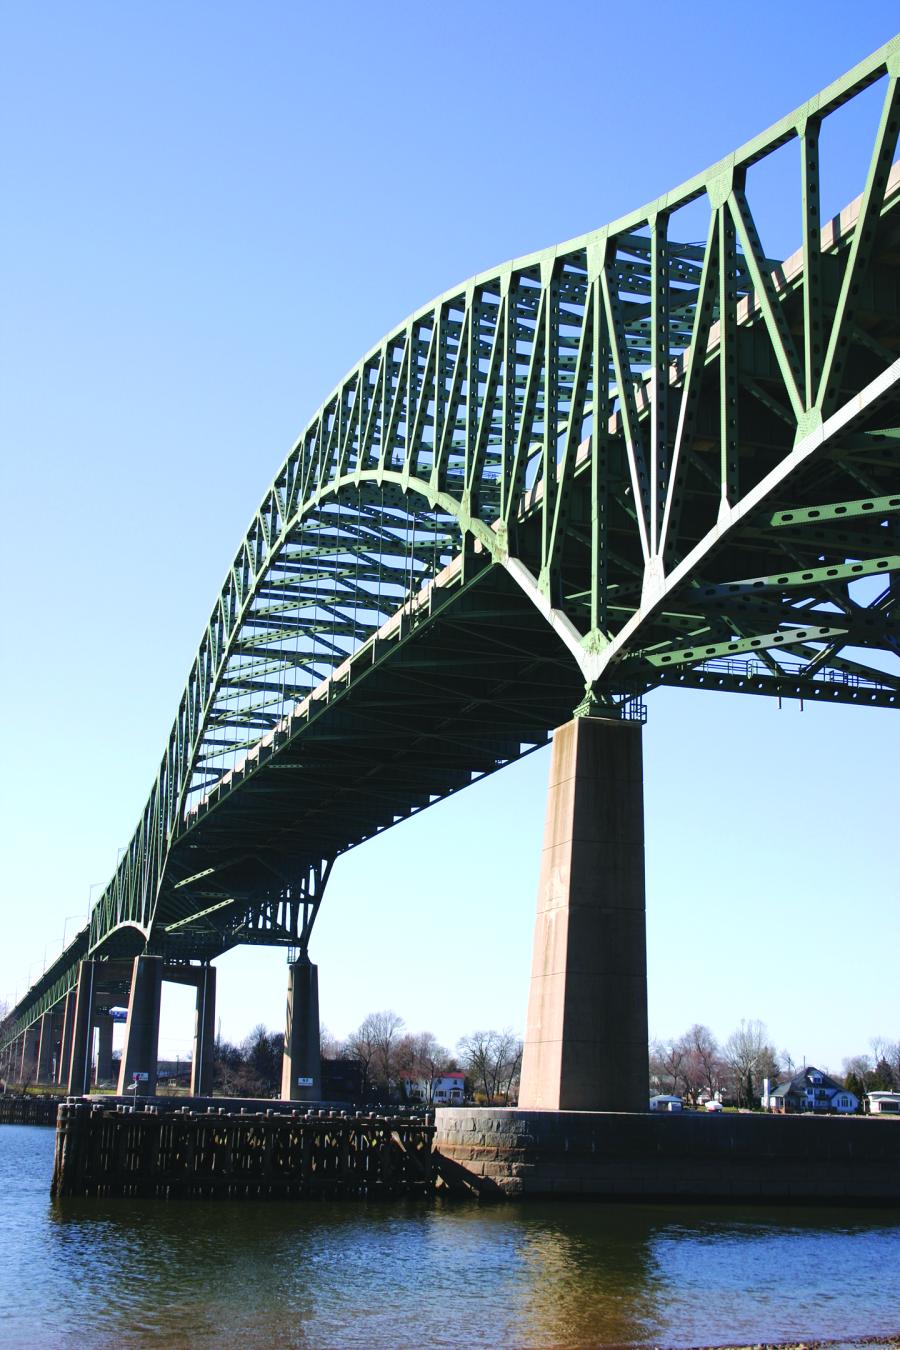 Pennsylvania Turnpike photo
Delaware River Bridge, Bucks County, I-276